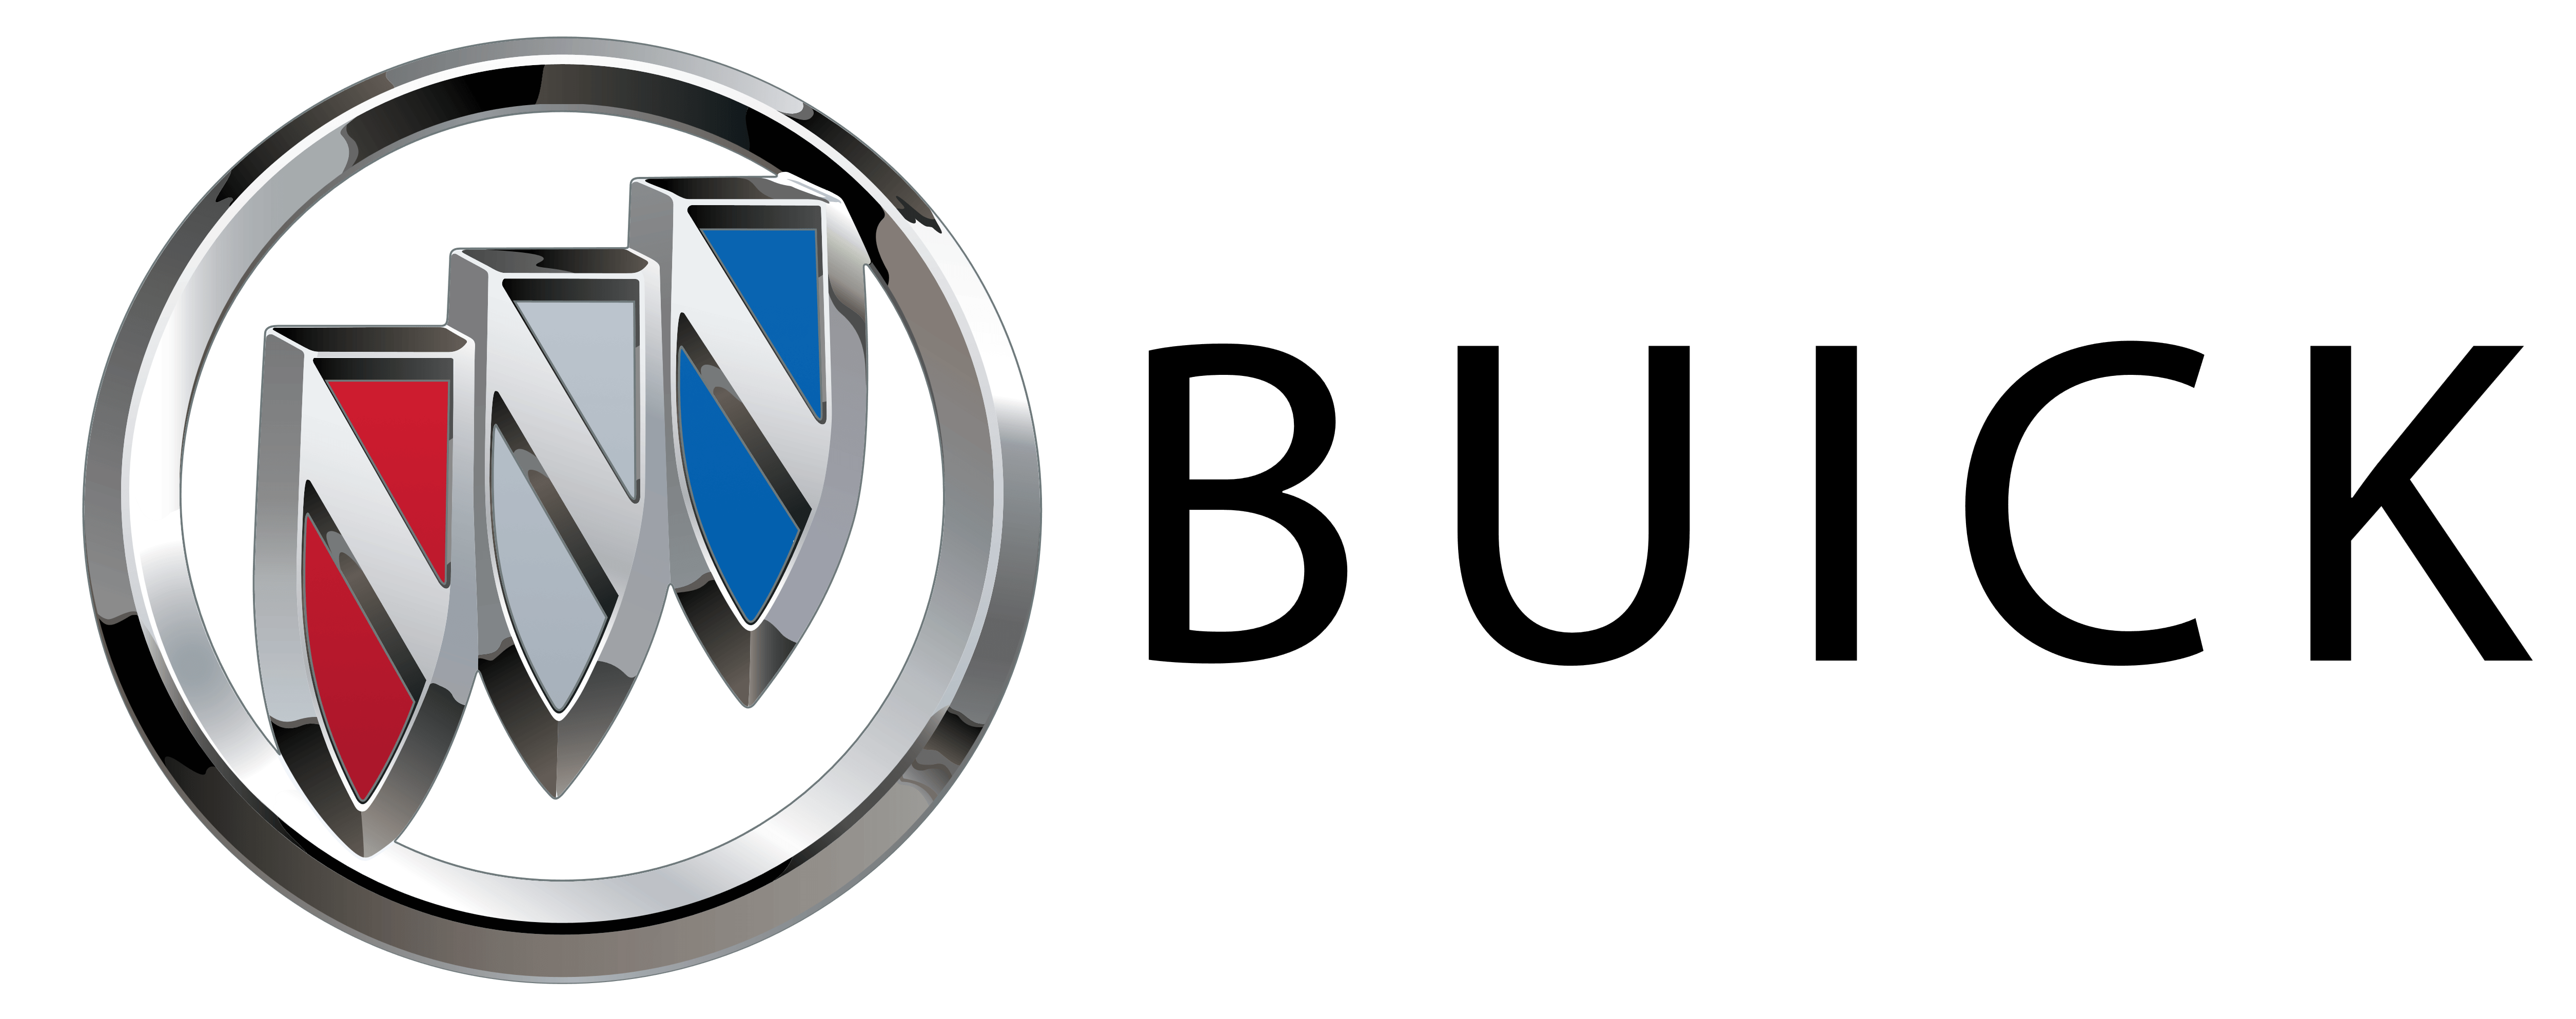 Buik Logo - Buick